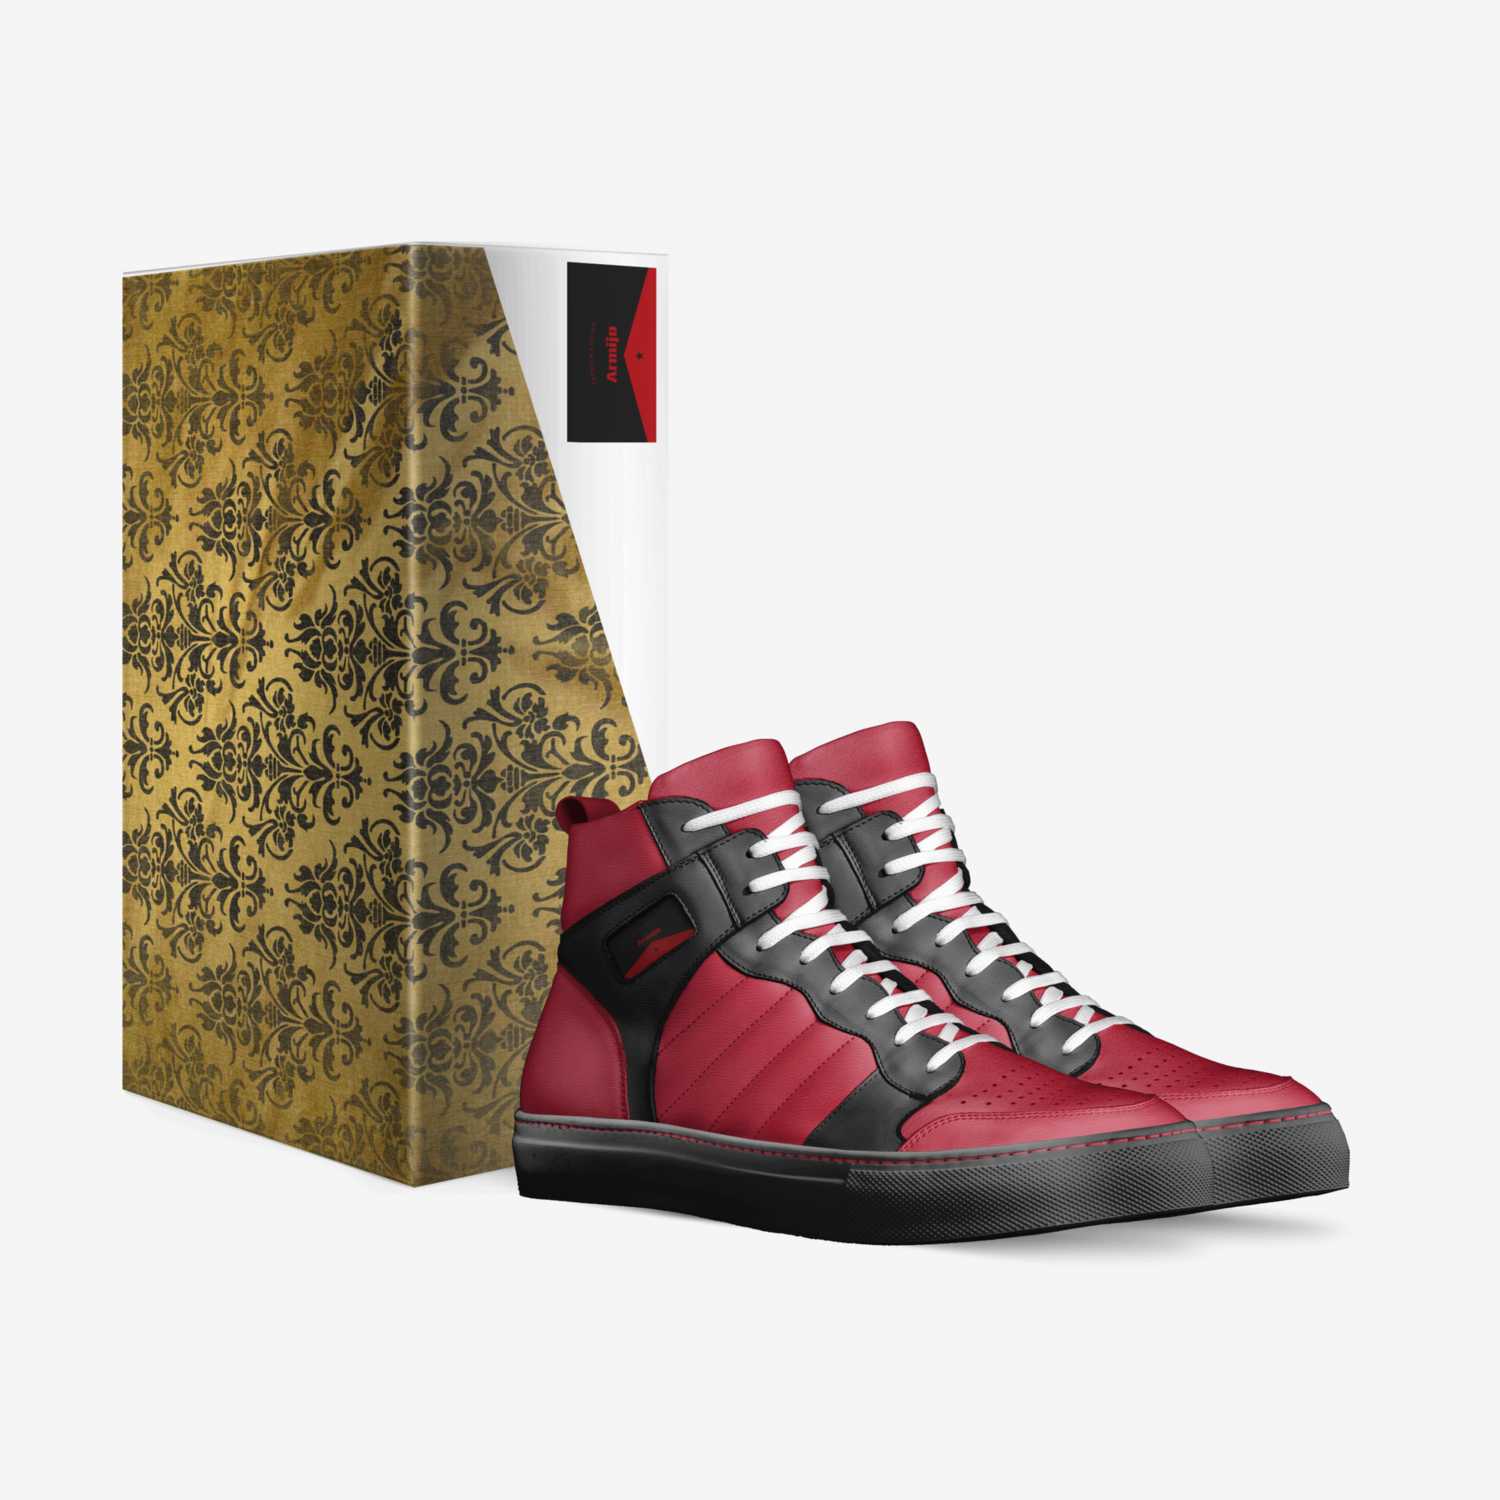 Armijo custom made in Italy shoes by Isaiah Armijo | Box view